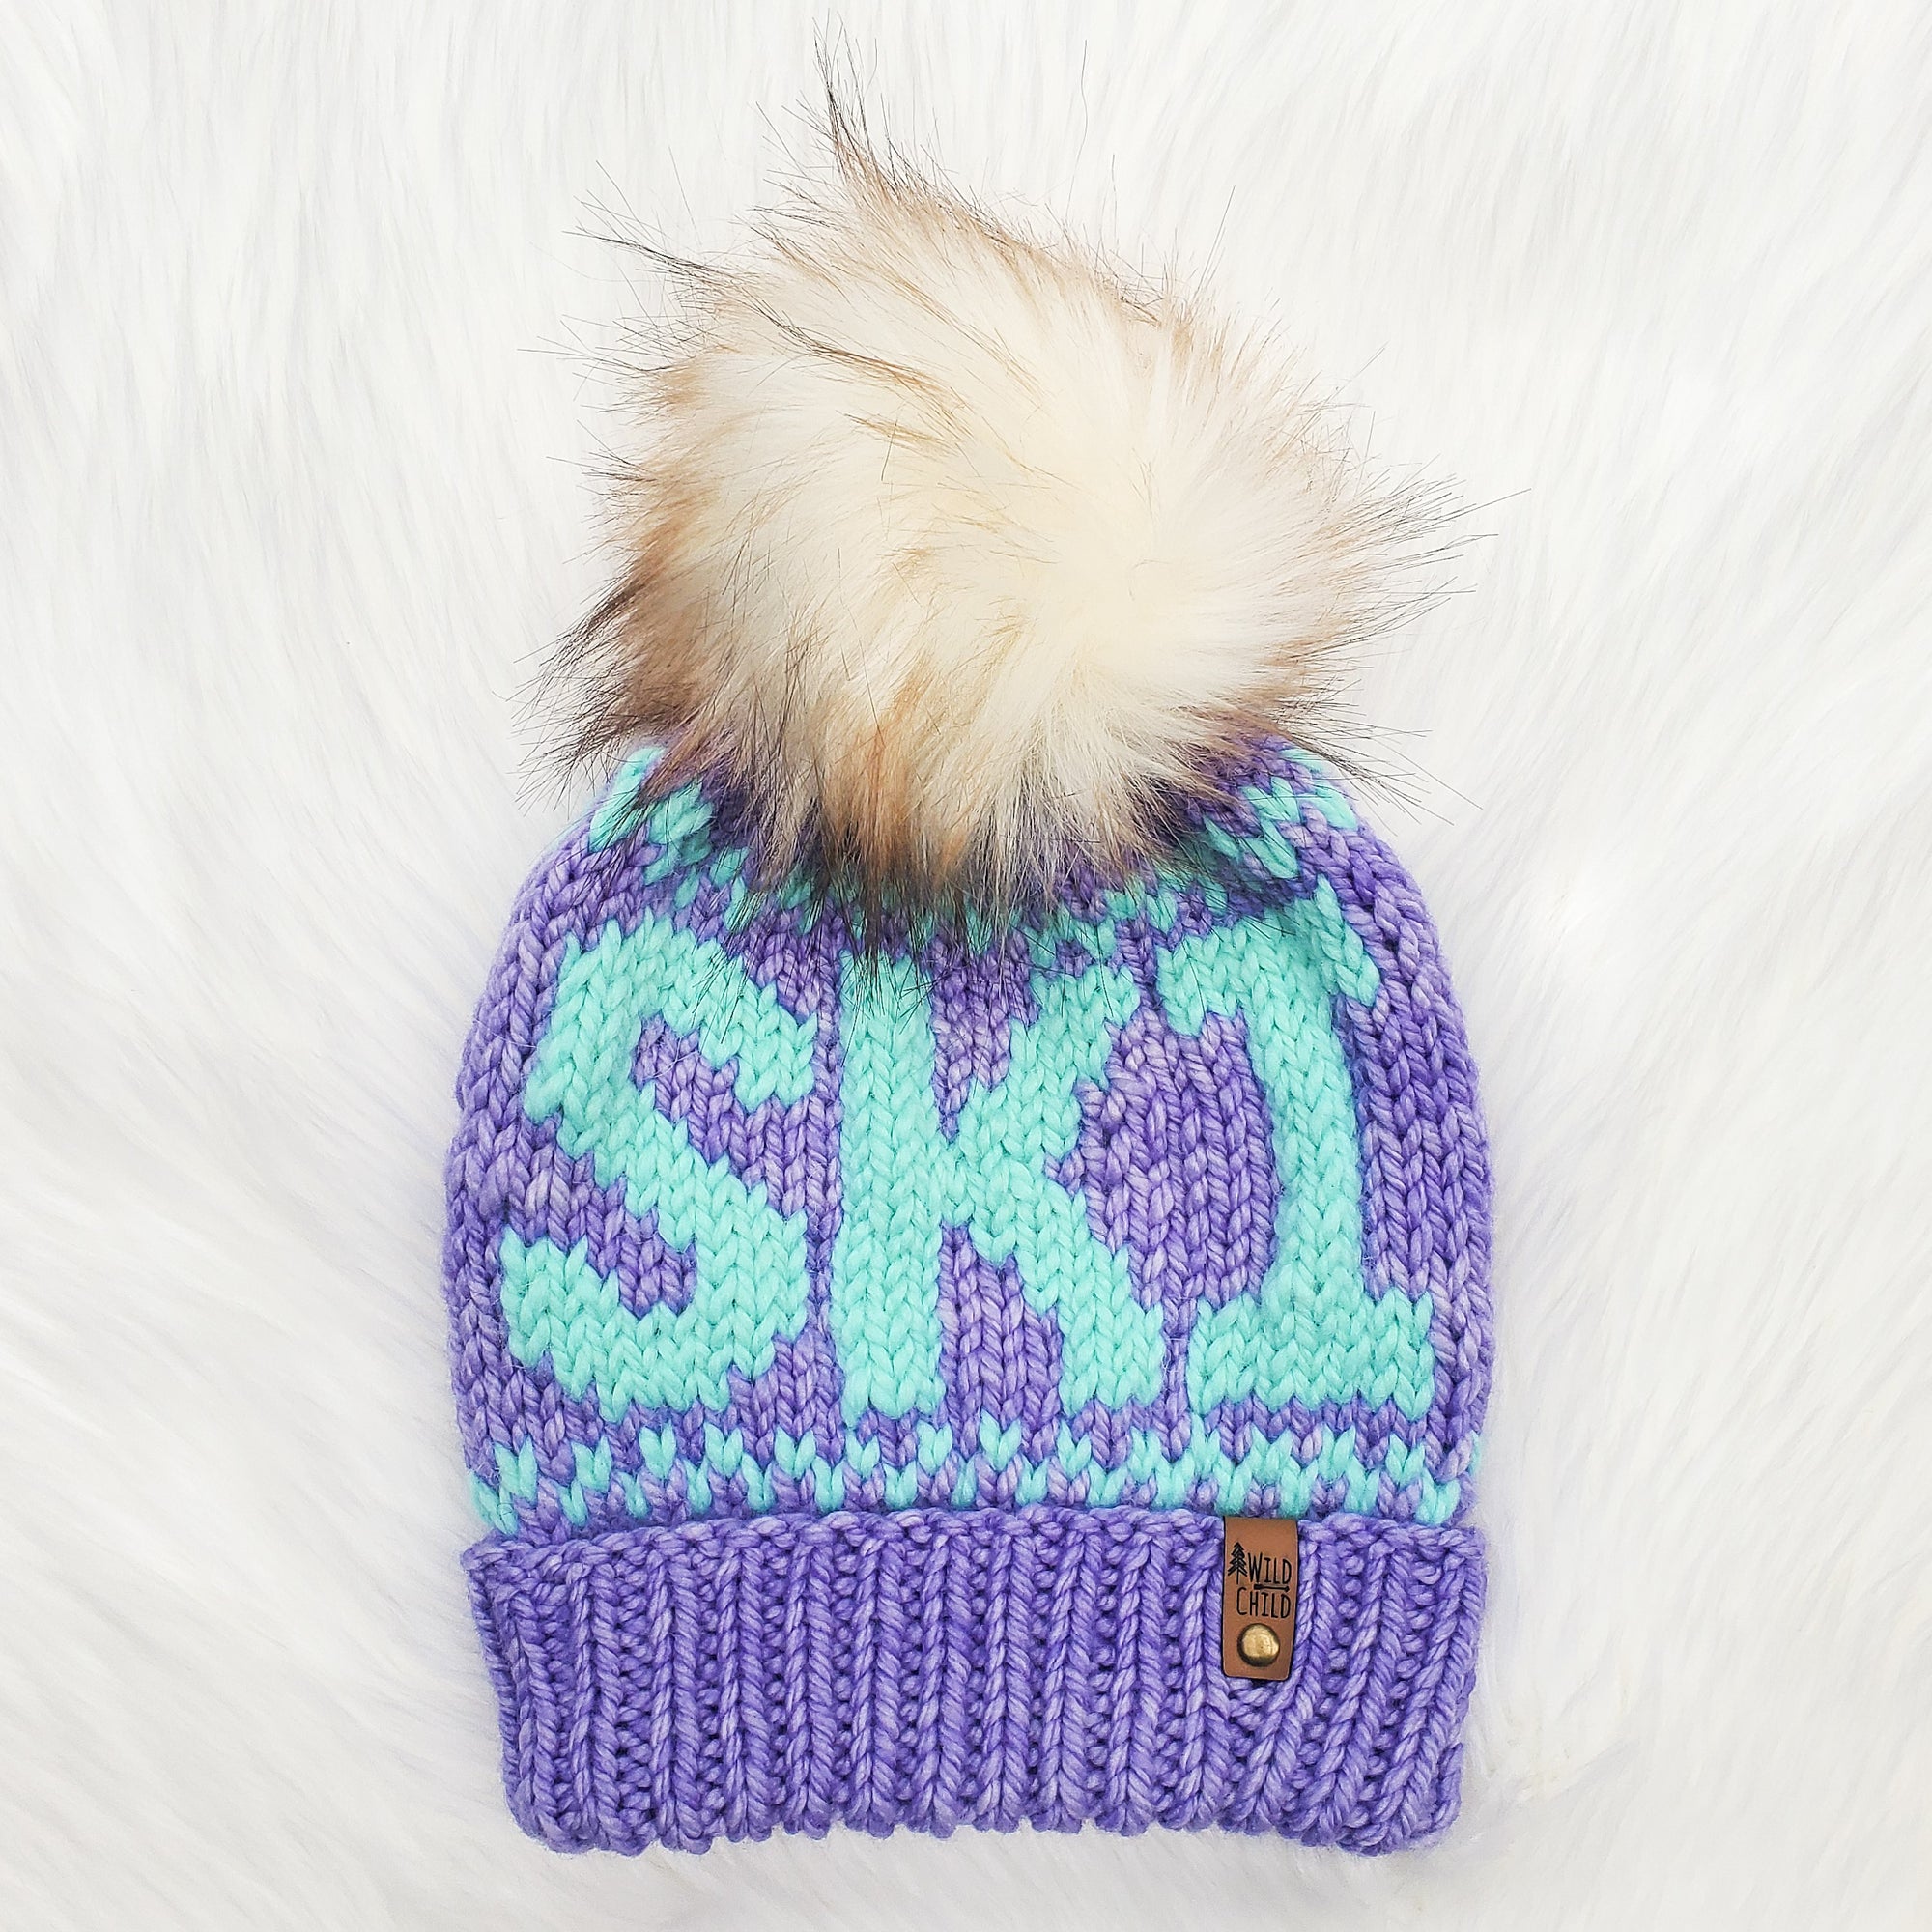 SKI Hat - Ready to Ship - Adult Size